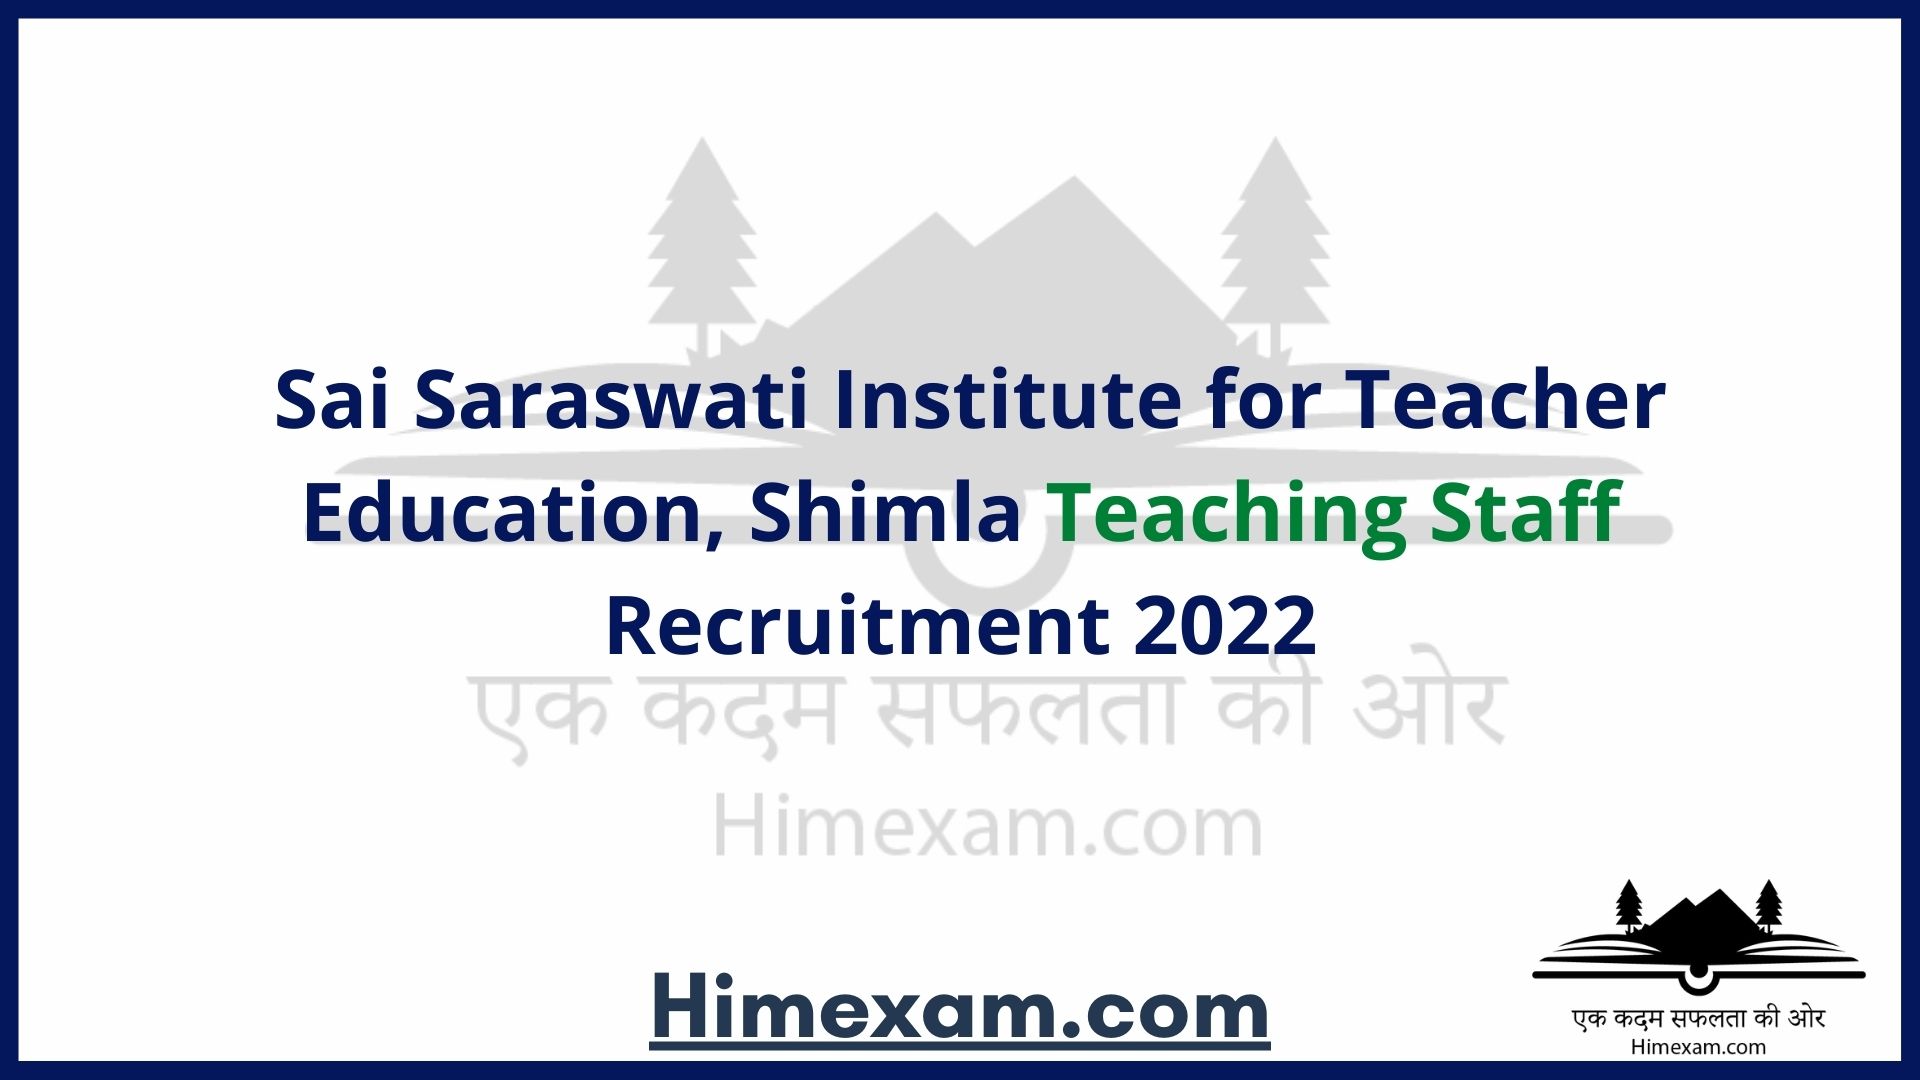 Sai Saraswati Institute for Teacher Education, Shimla Teaching Staff Recruitment 2022